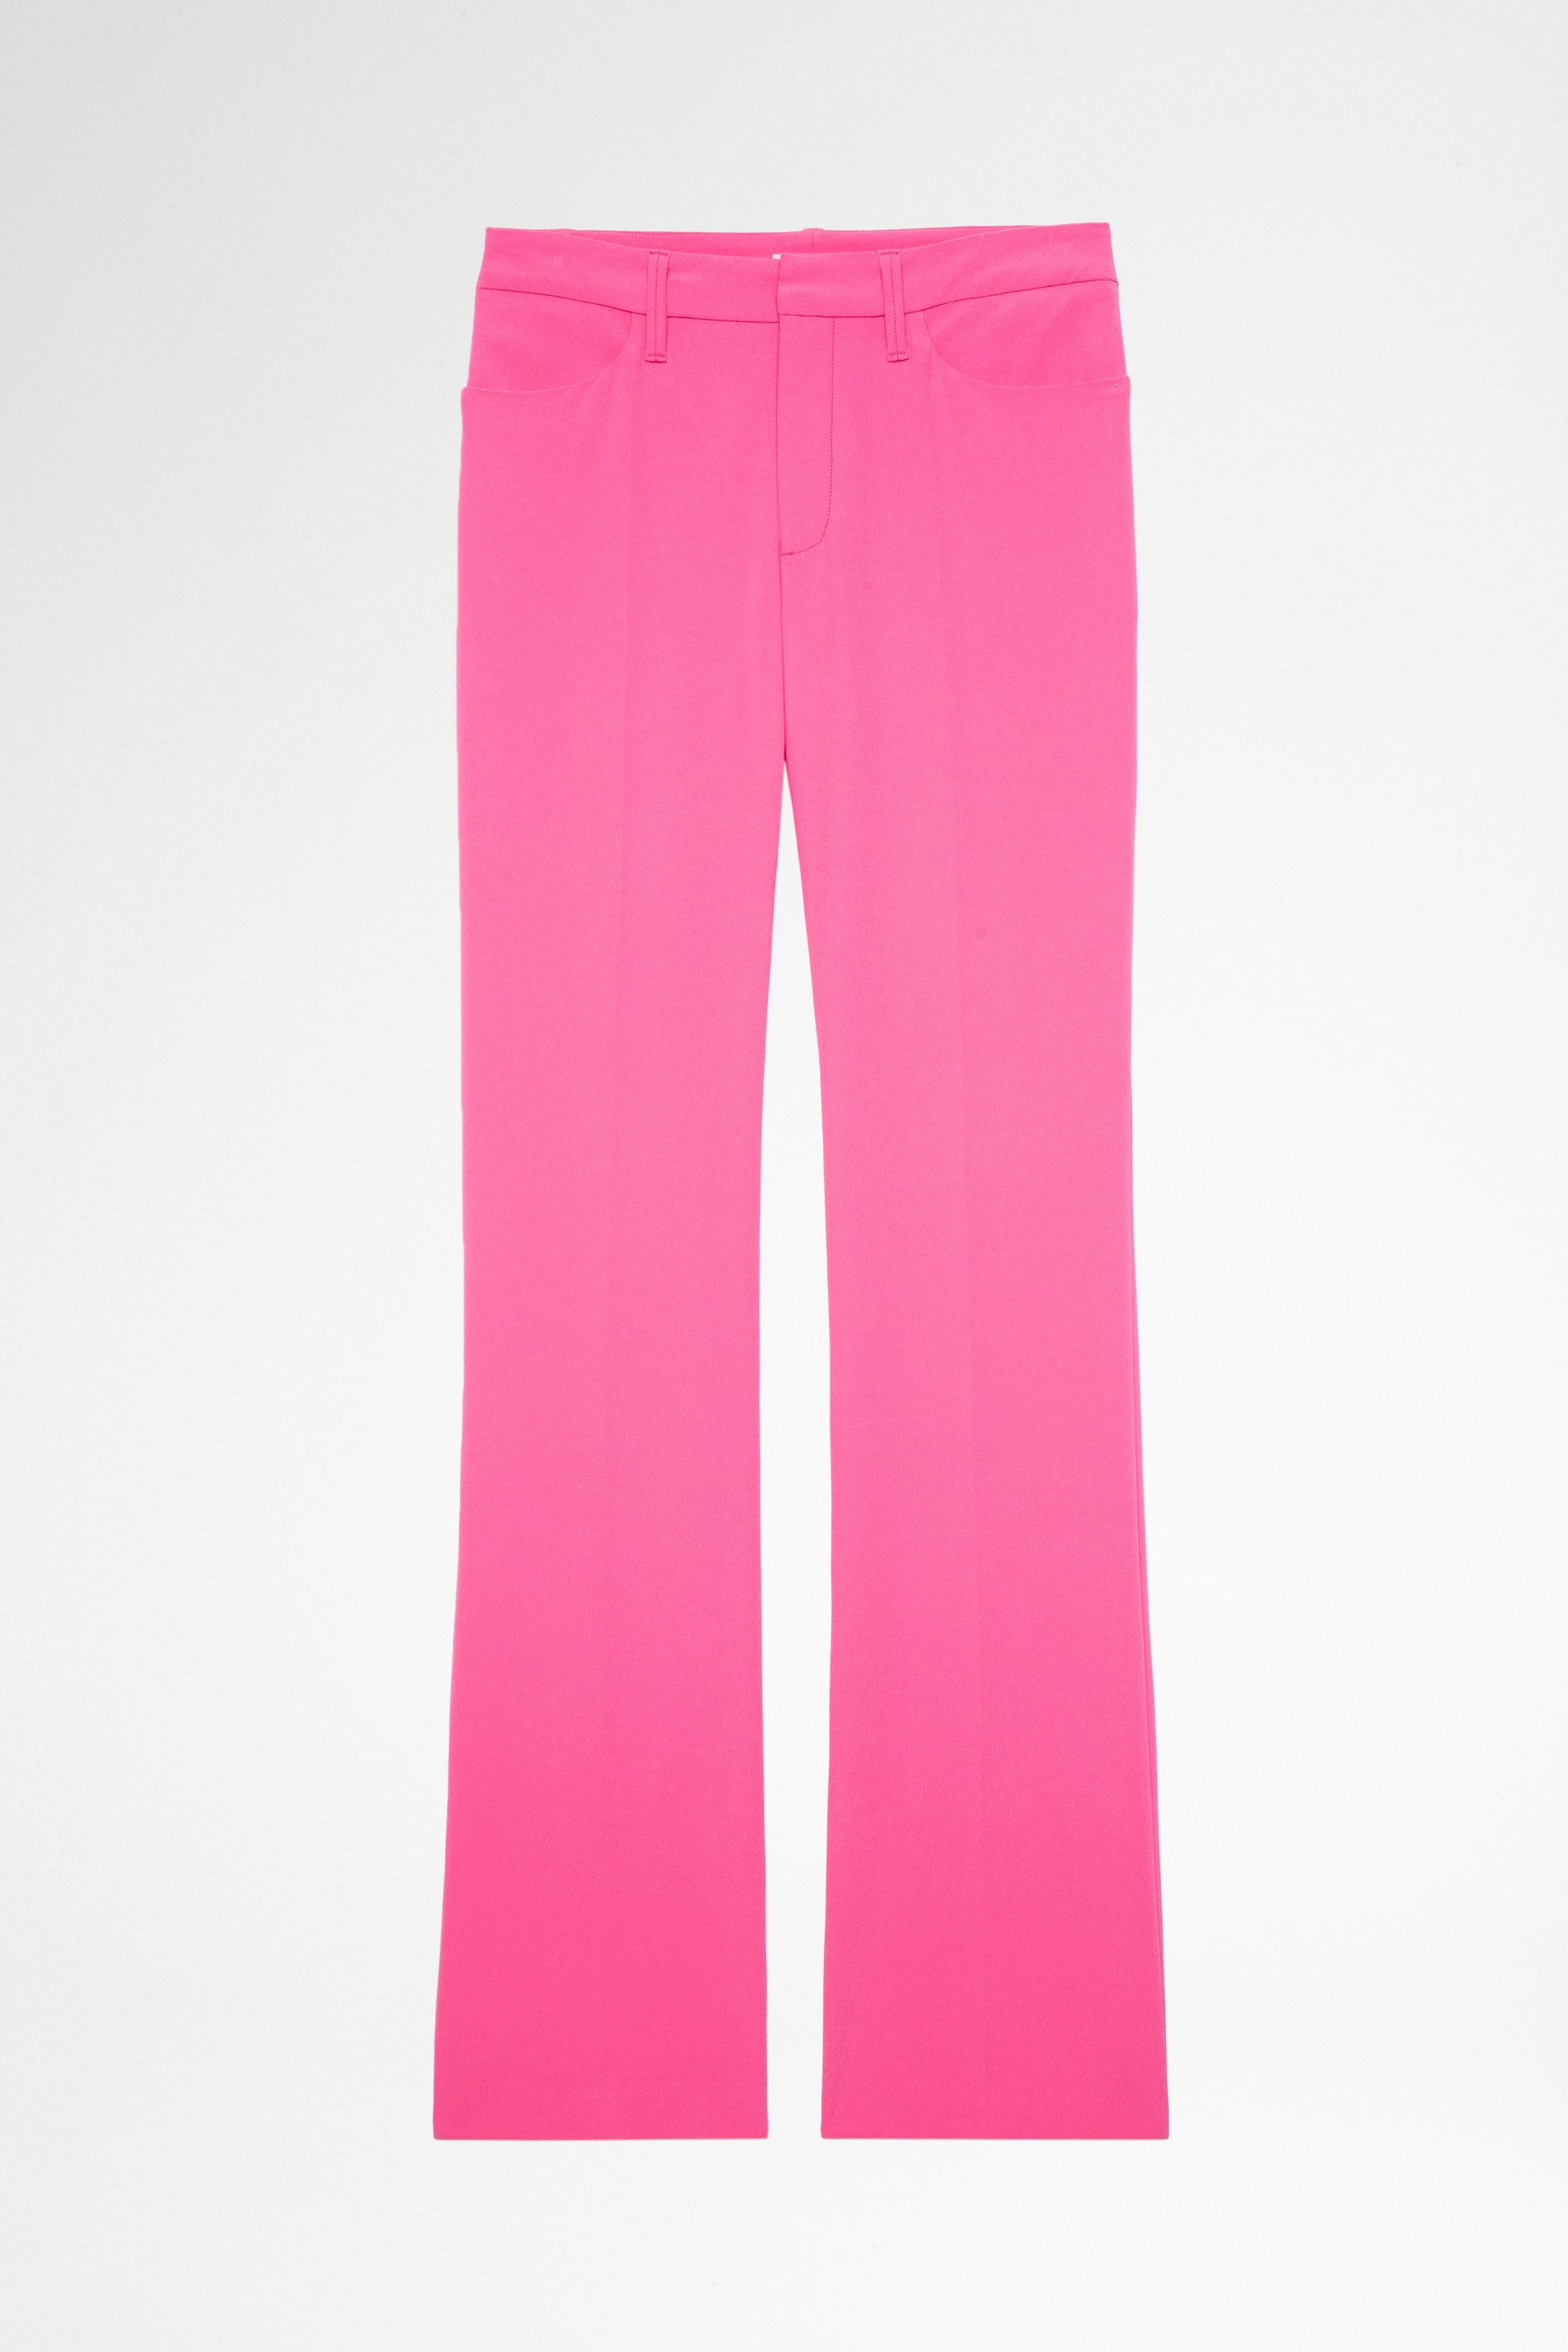 Pistol パンツ Women’s flared pink pants